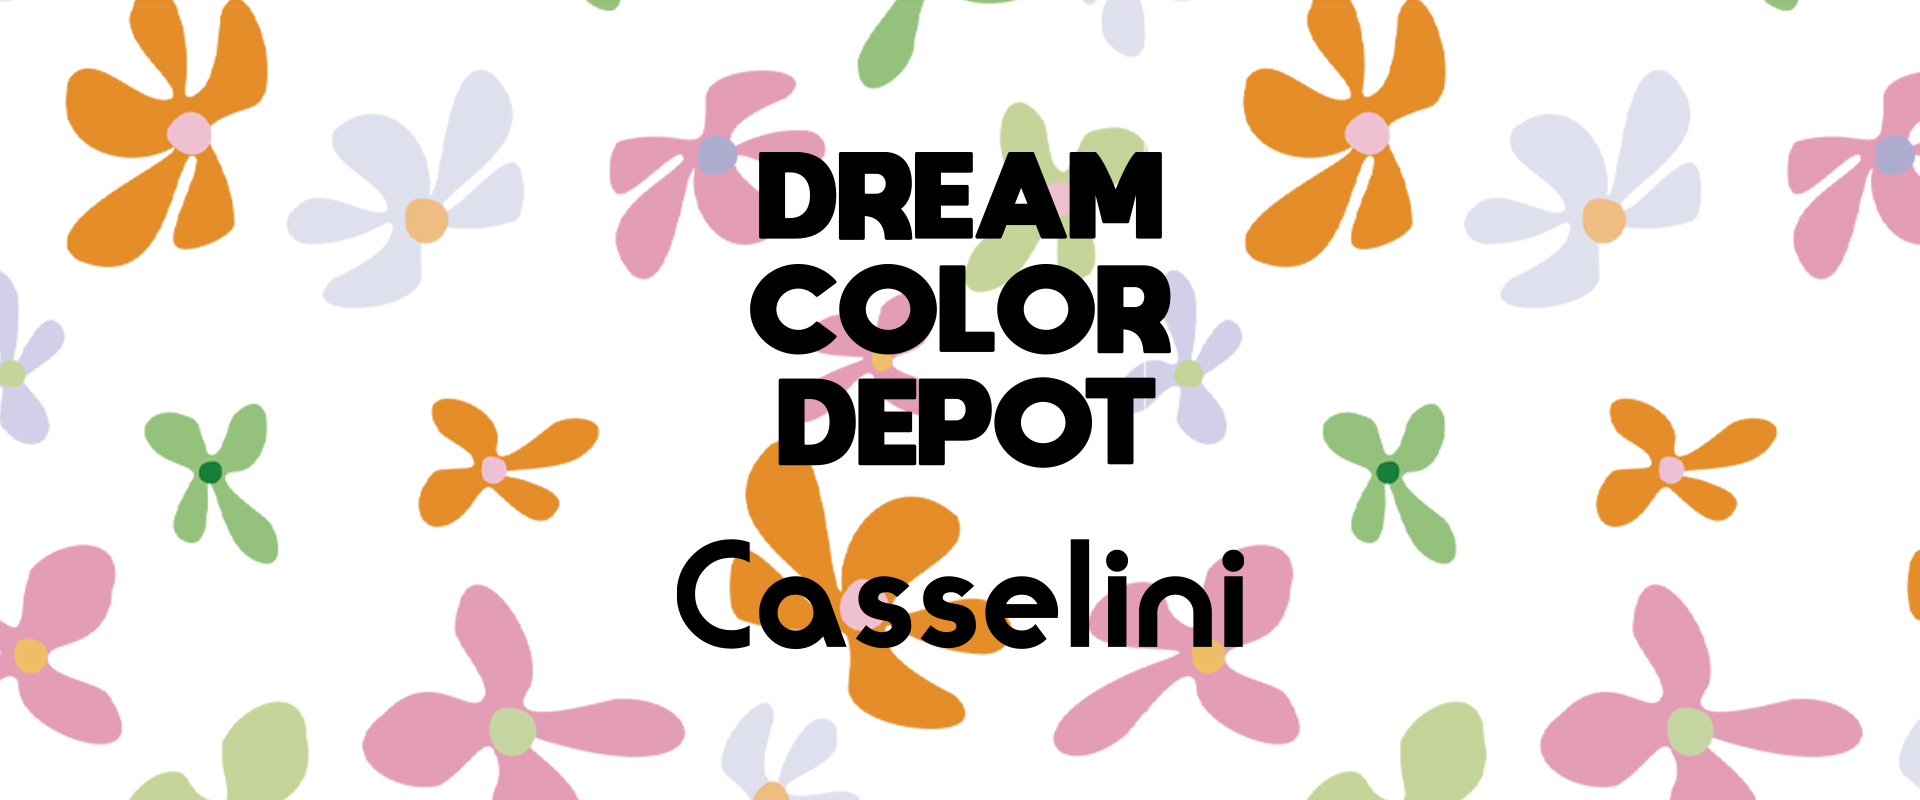 DREAM COLOR DEPOT×Casselini